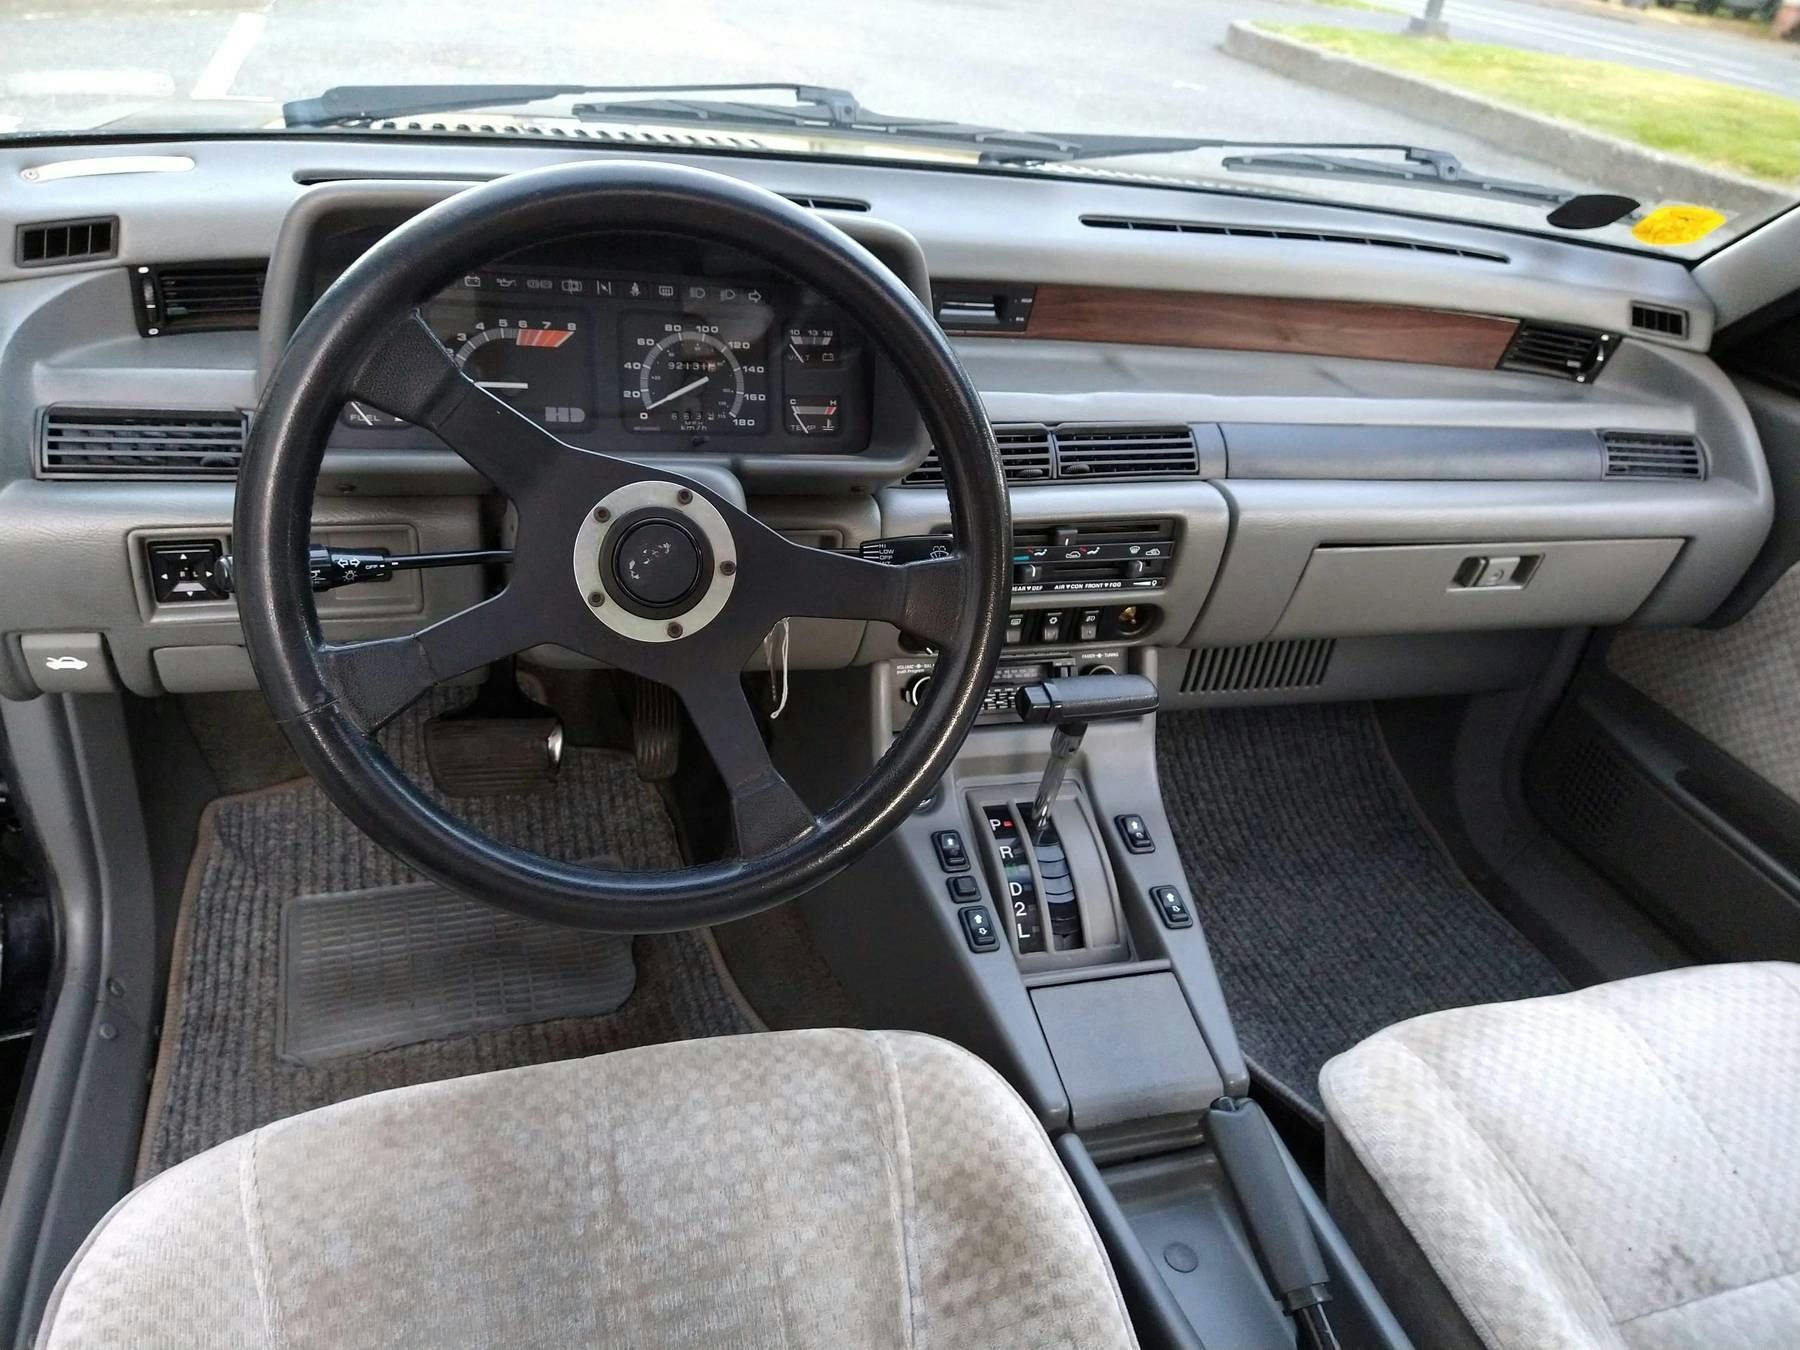 1986 Hyundai Stellar Executive interior